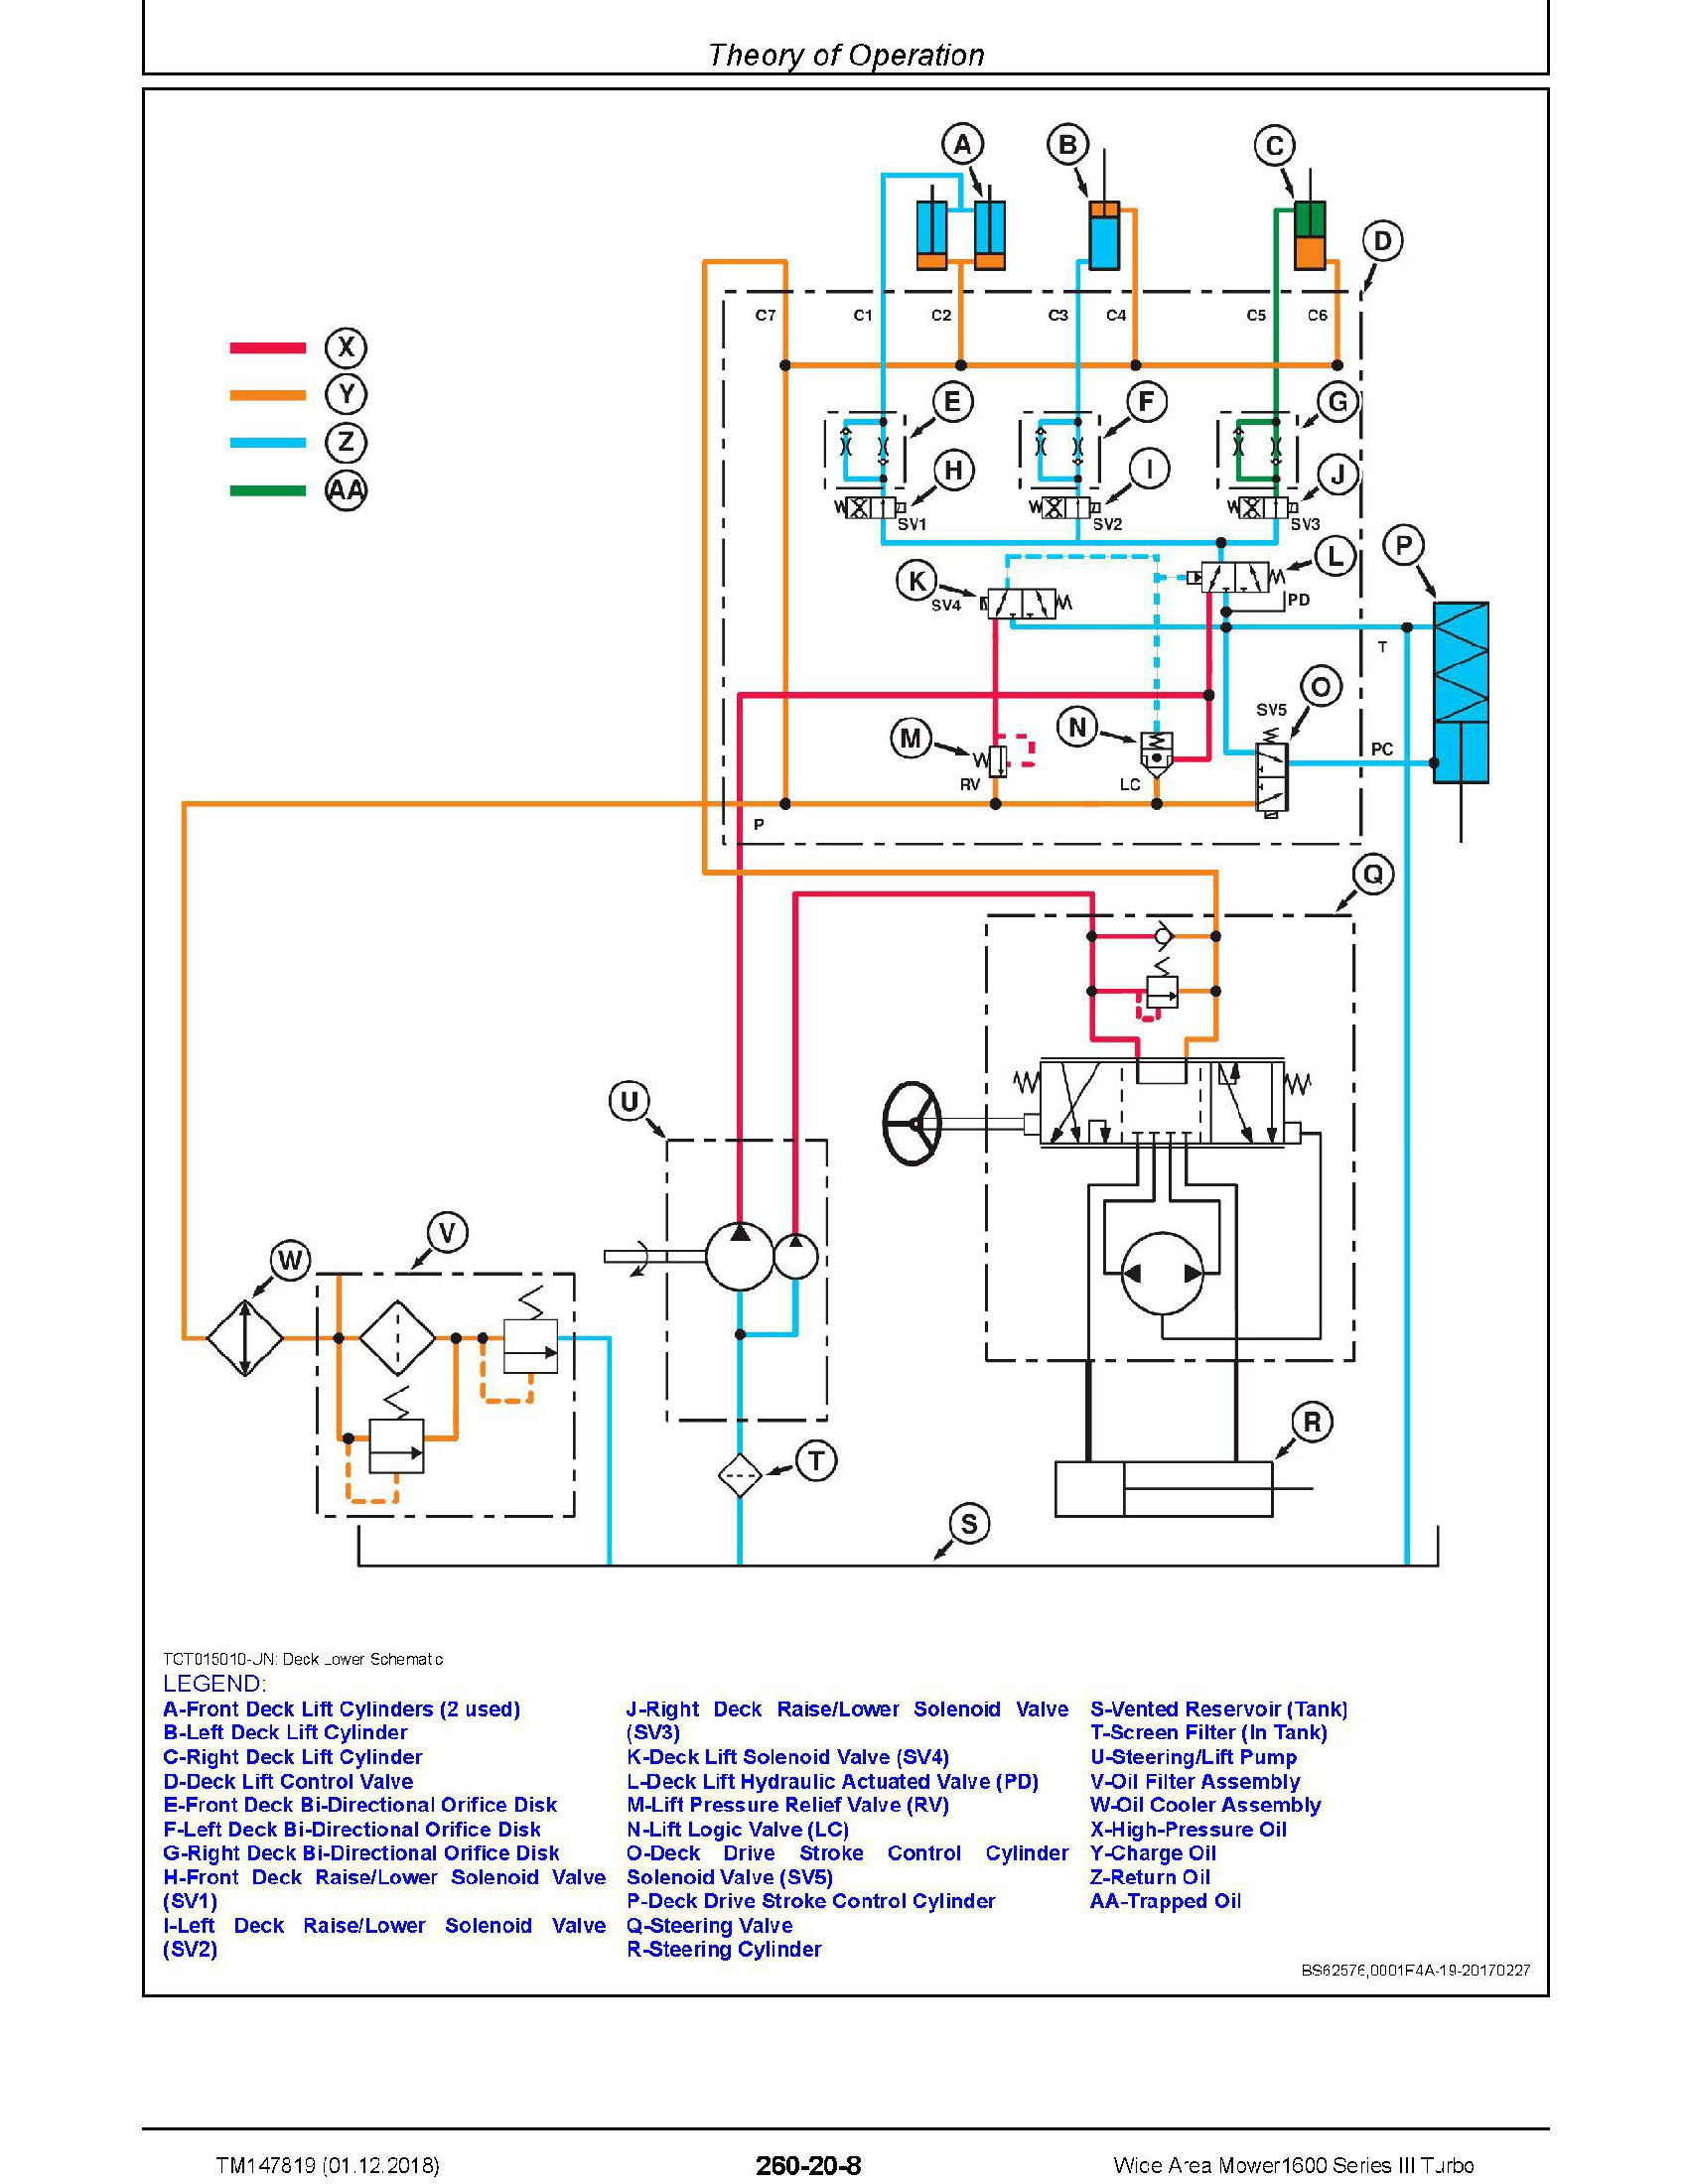 John Deere 870GLC manual pdf